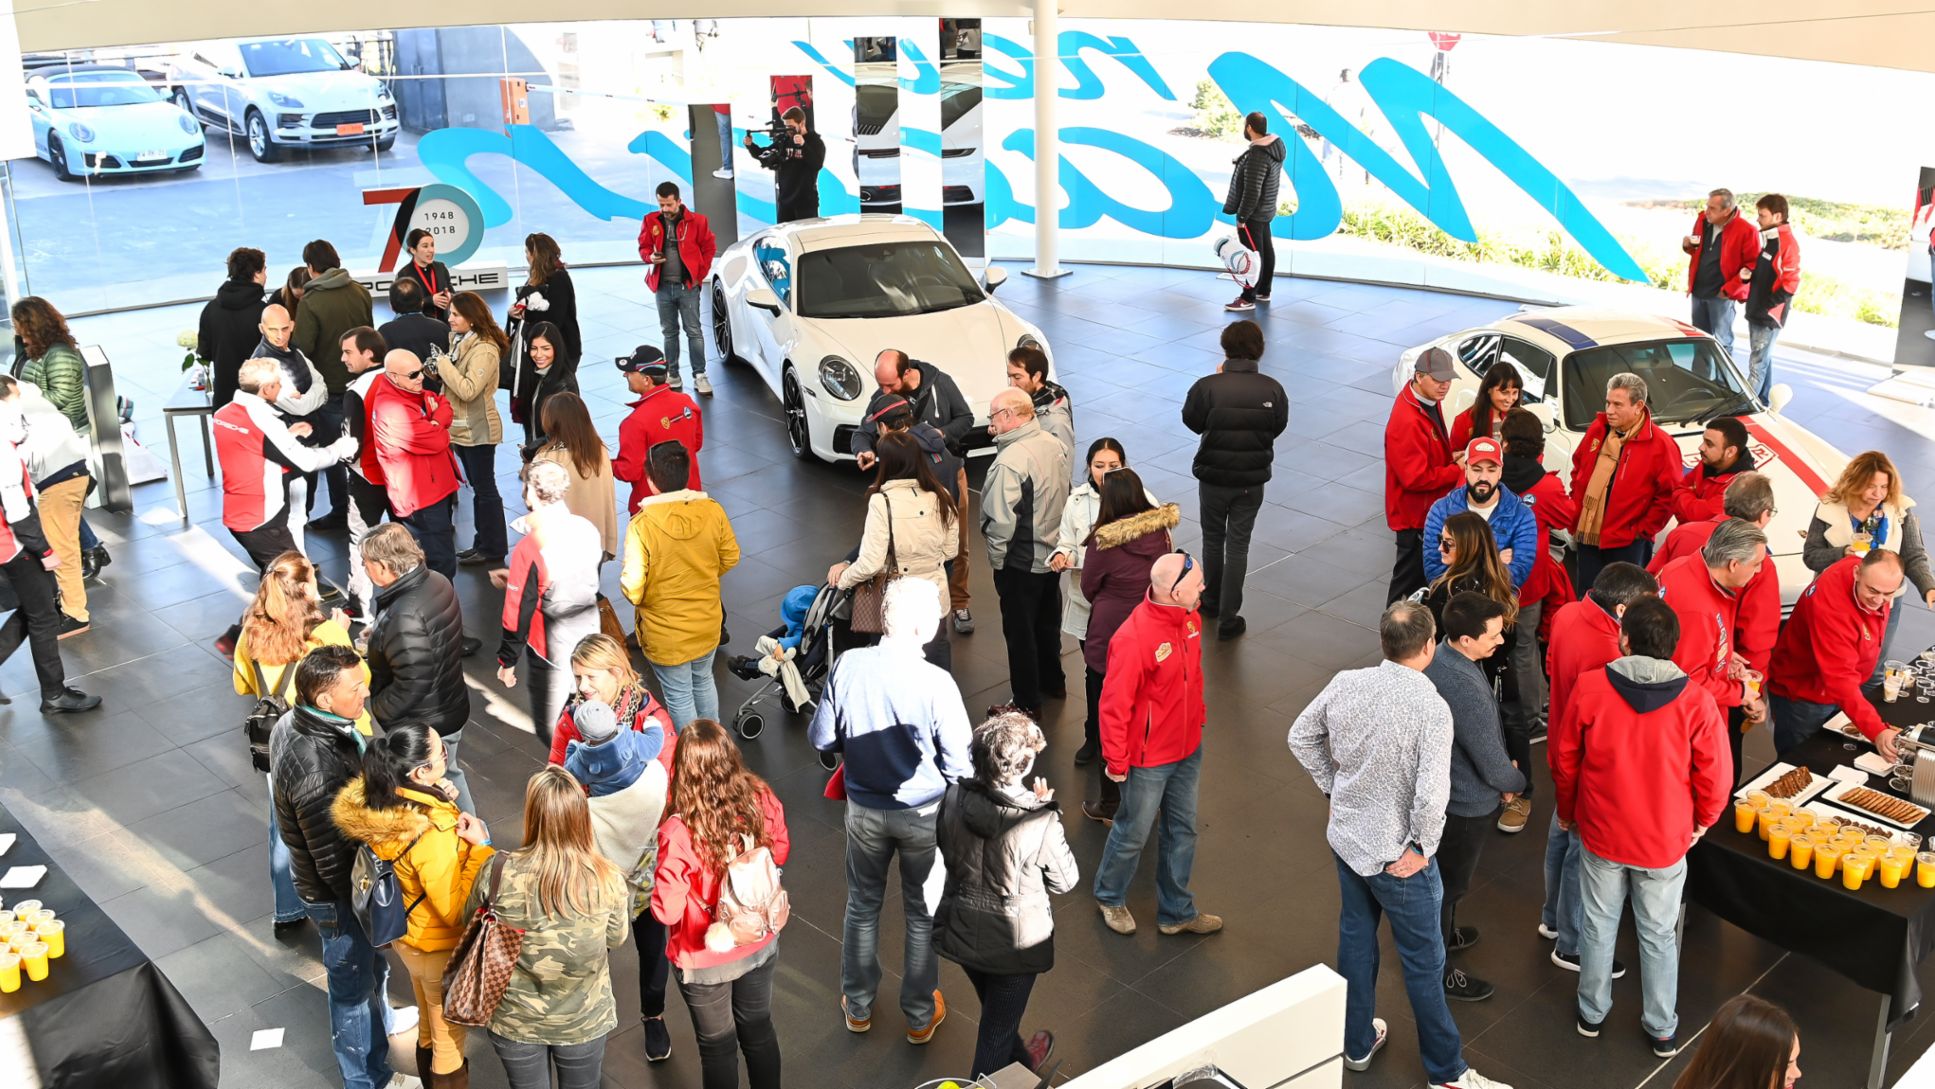 Clientes se reúnen en el Porsche Center Santiago para dar inicio al evento "Sportscar Together Day"